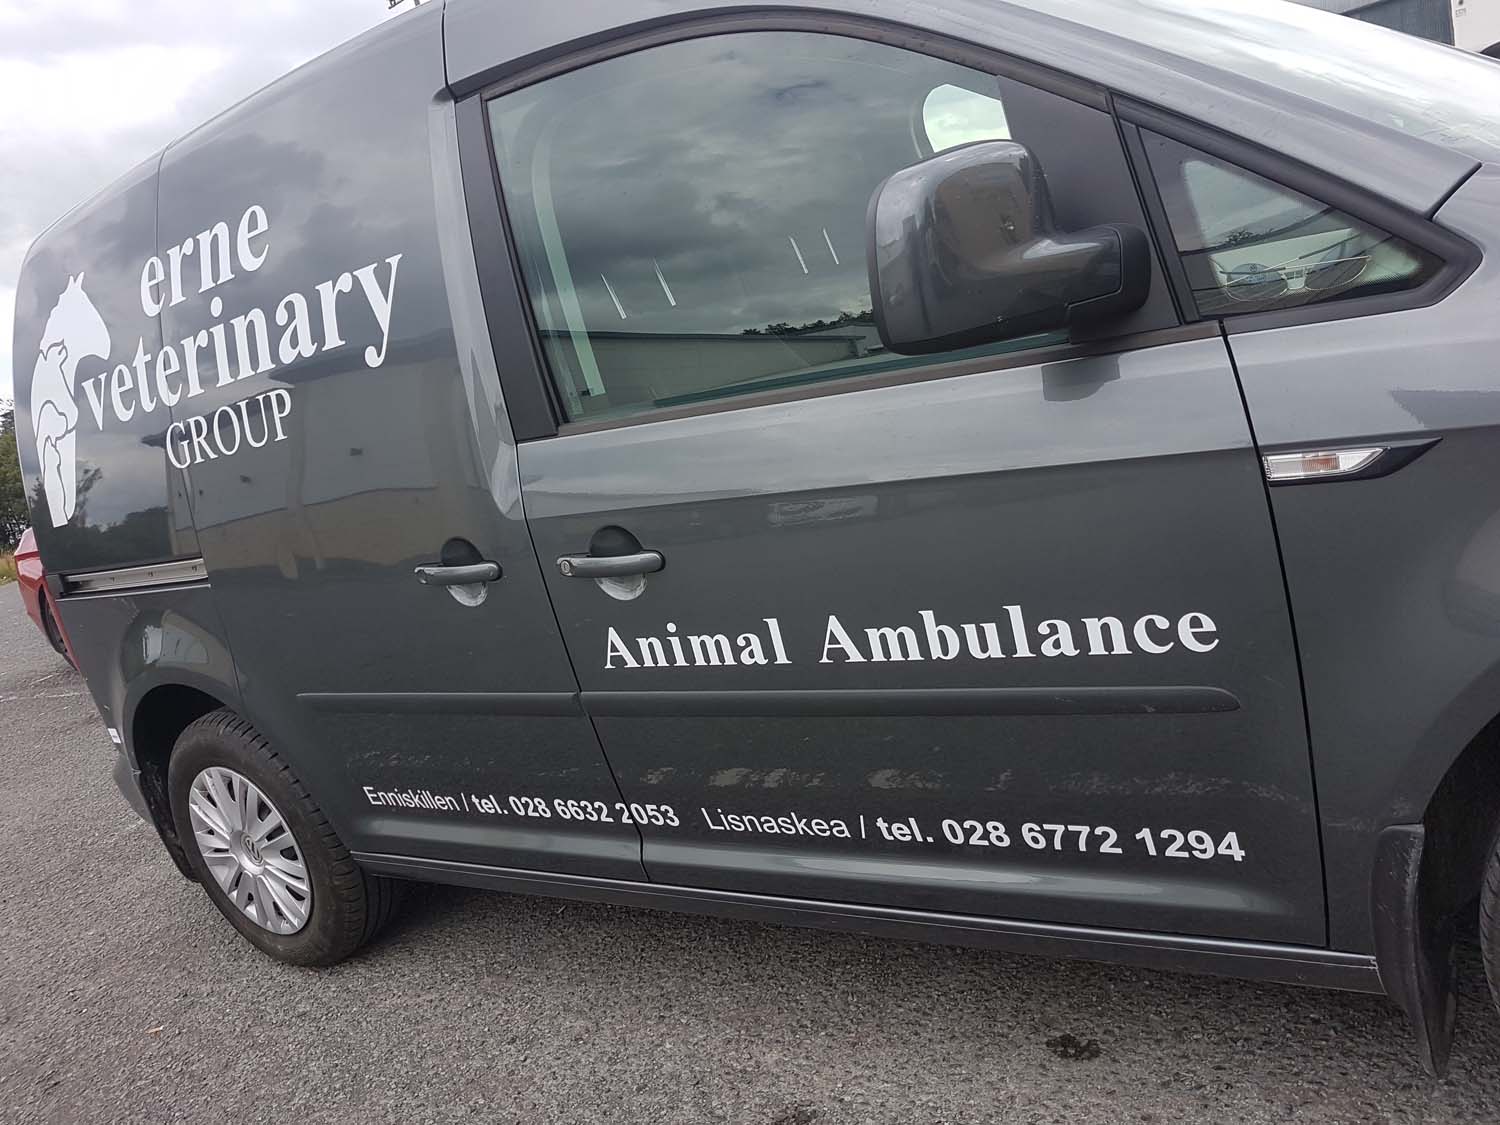 Animal Ambulance Graphics for Erne Veterinary 03